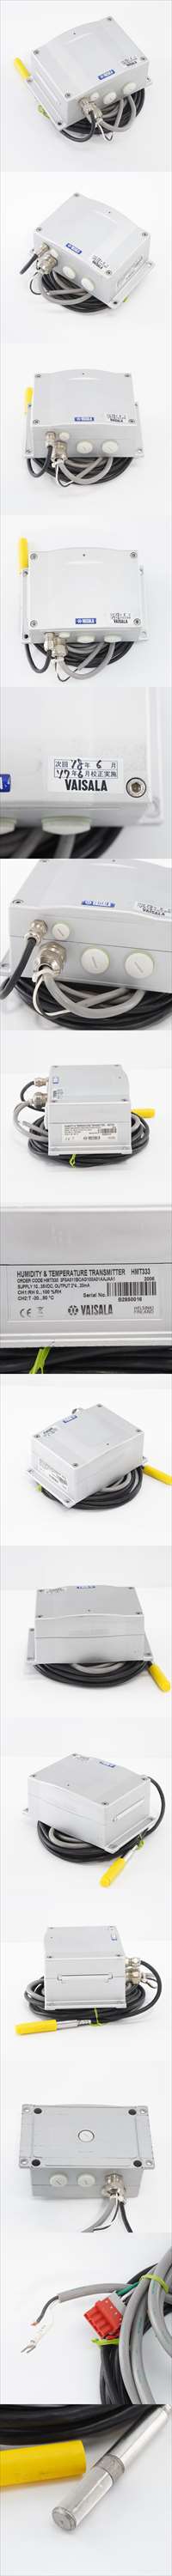 海外製[DW]USED 8日保証 06/2017CAL VAISALA HMT333 湿度温度変換器 HUMIDITY & TEMPER 環境測定器